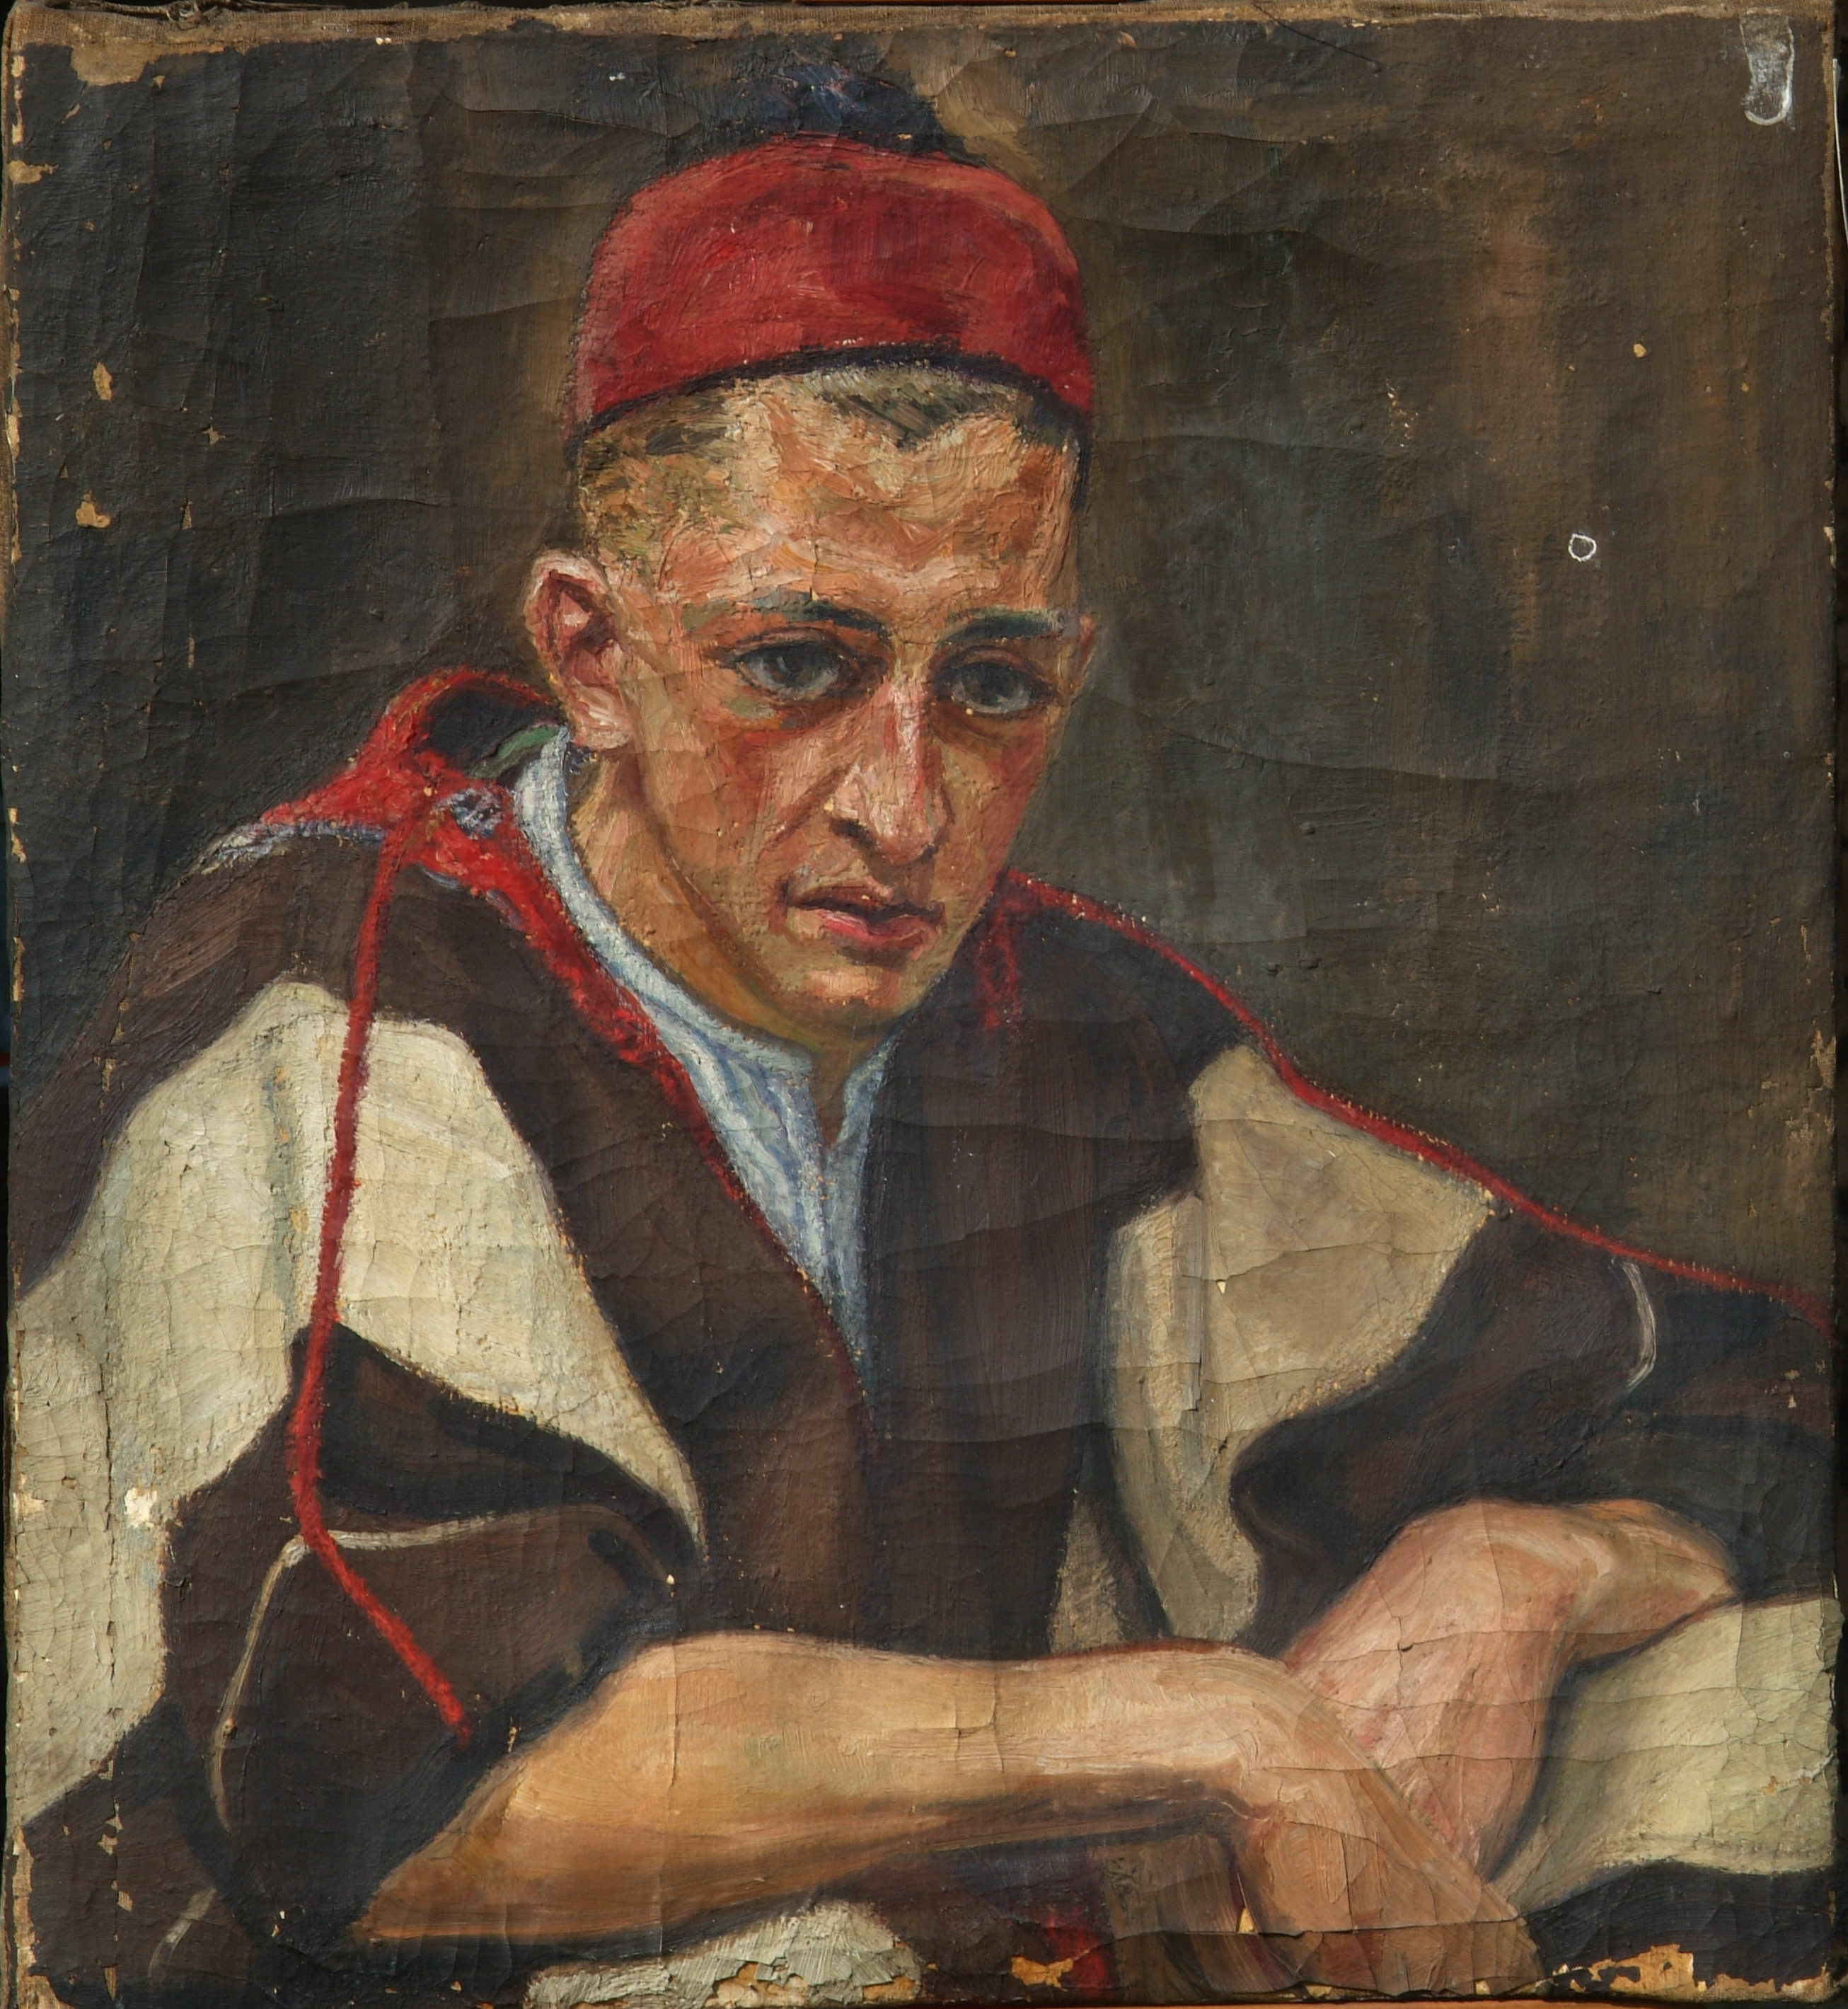 Marco Dodero arabo, olio su tela, cm 66 x 72, 1928